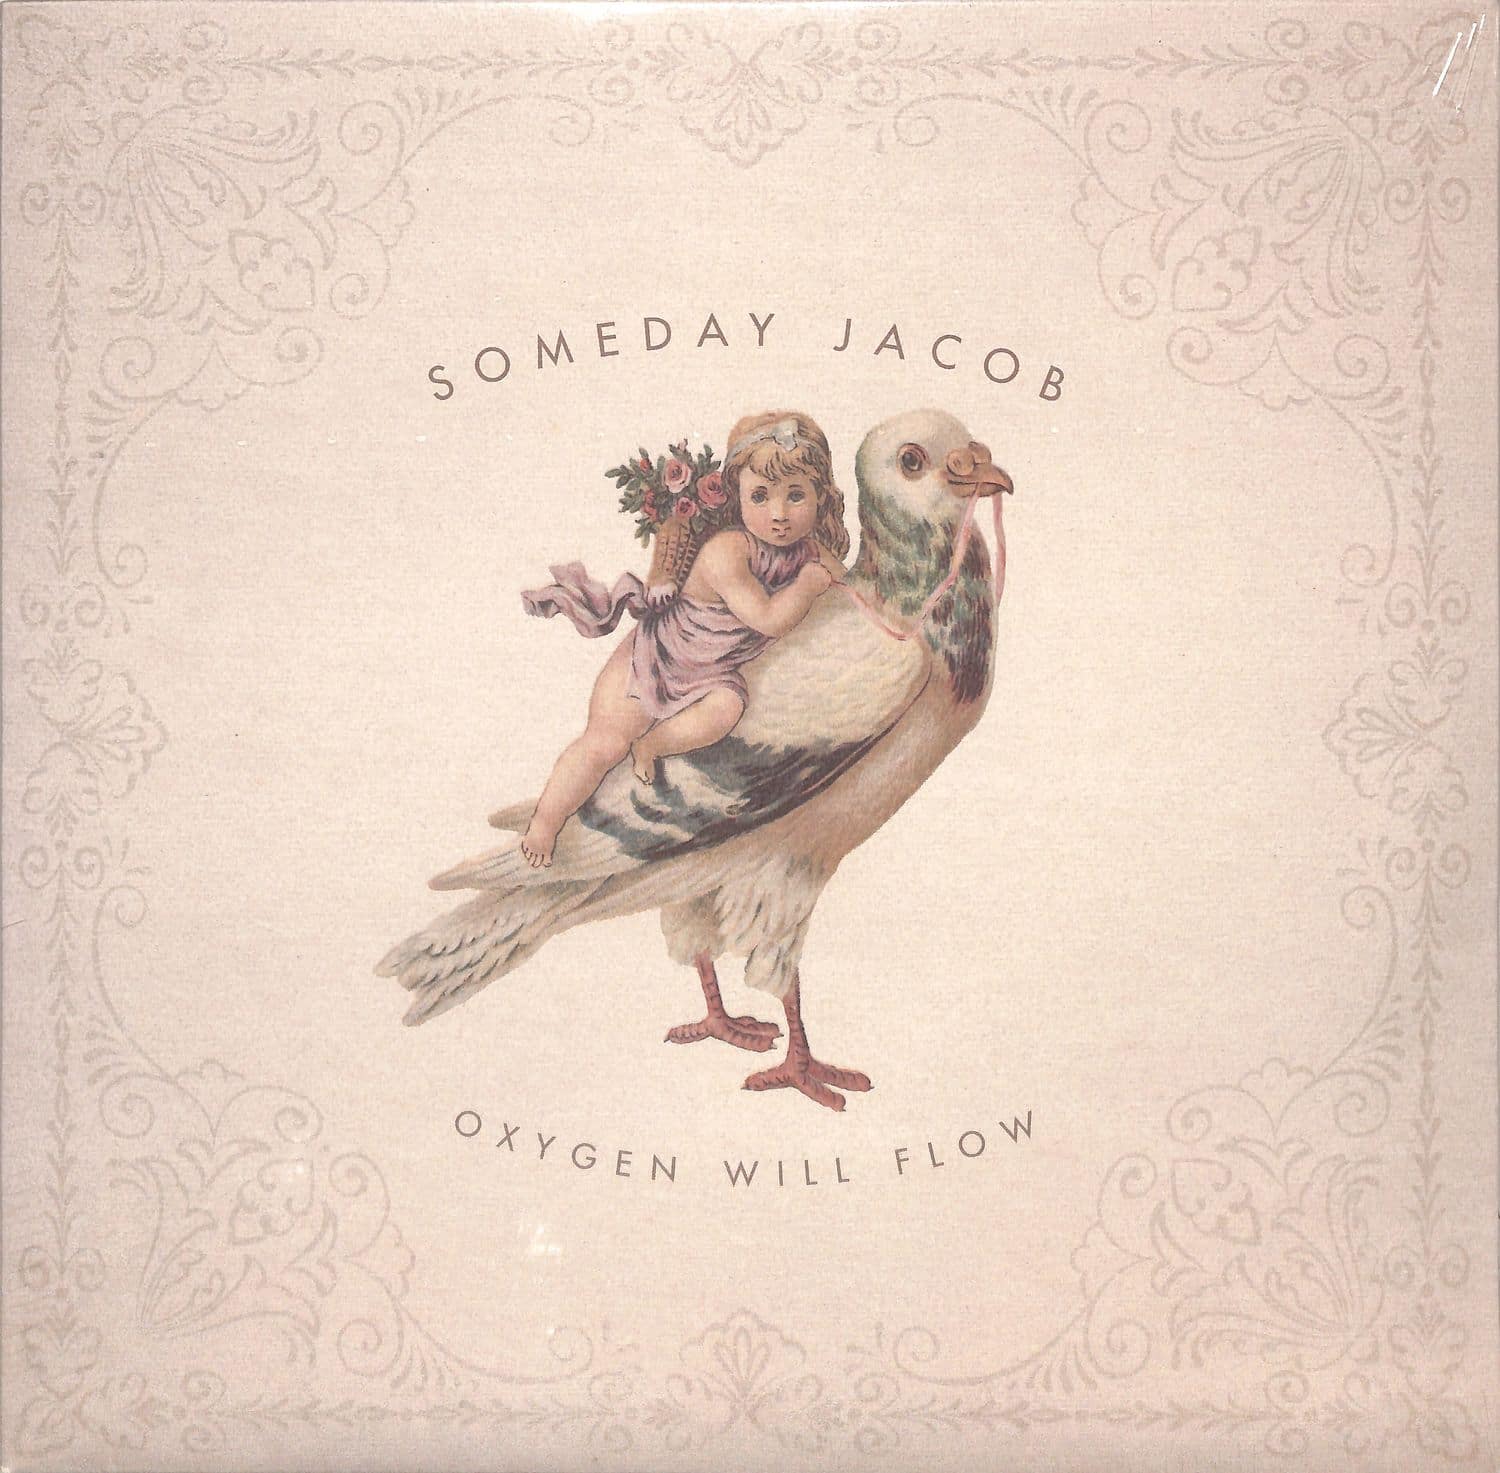 Someday Jacob - OXYGEN WILL FLOW 